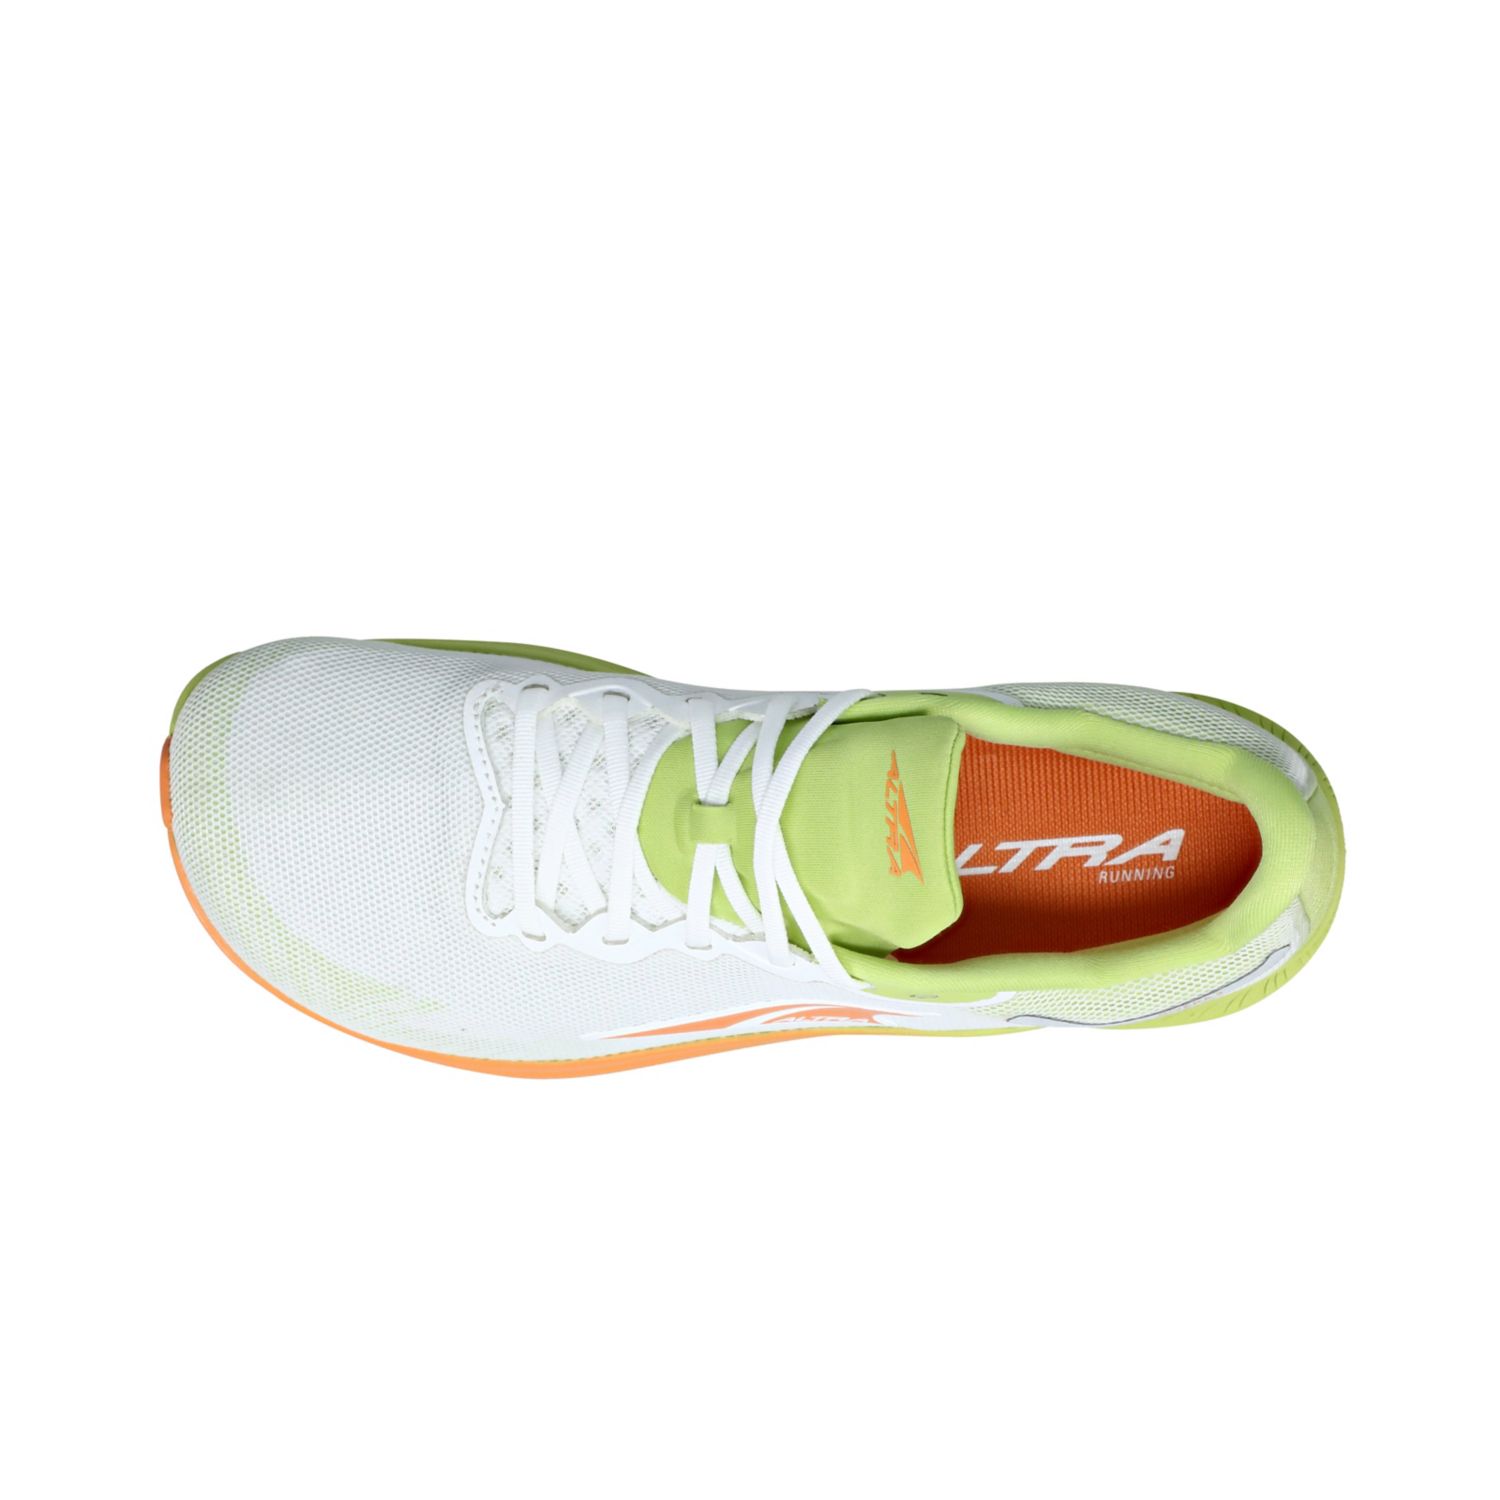 White / Green Altra Rivera 3 Women's Walking Shoes | Ireland-54210789